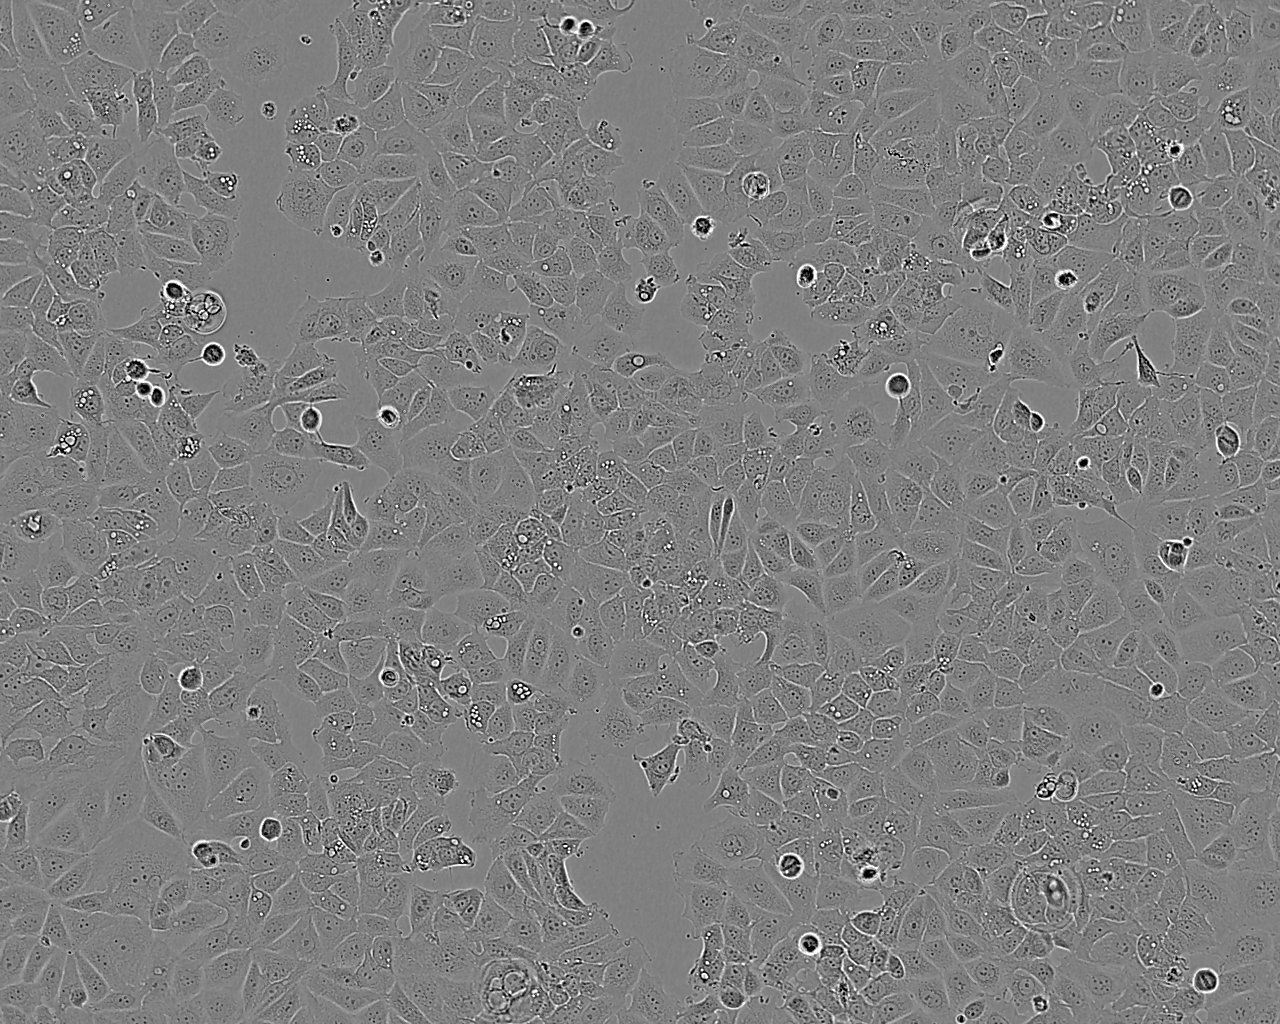 HCC2157 epithelioid cells人乳腺导管癌细胞系